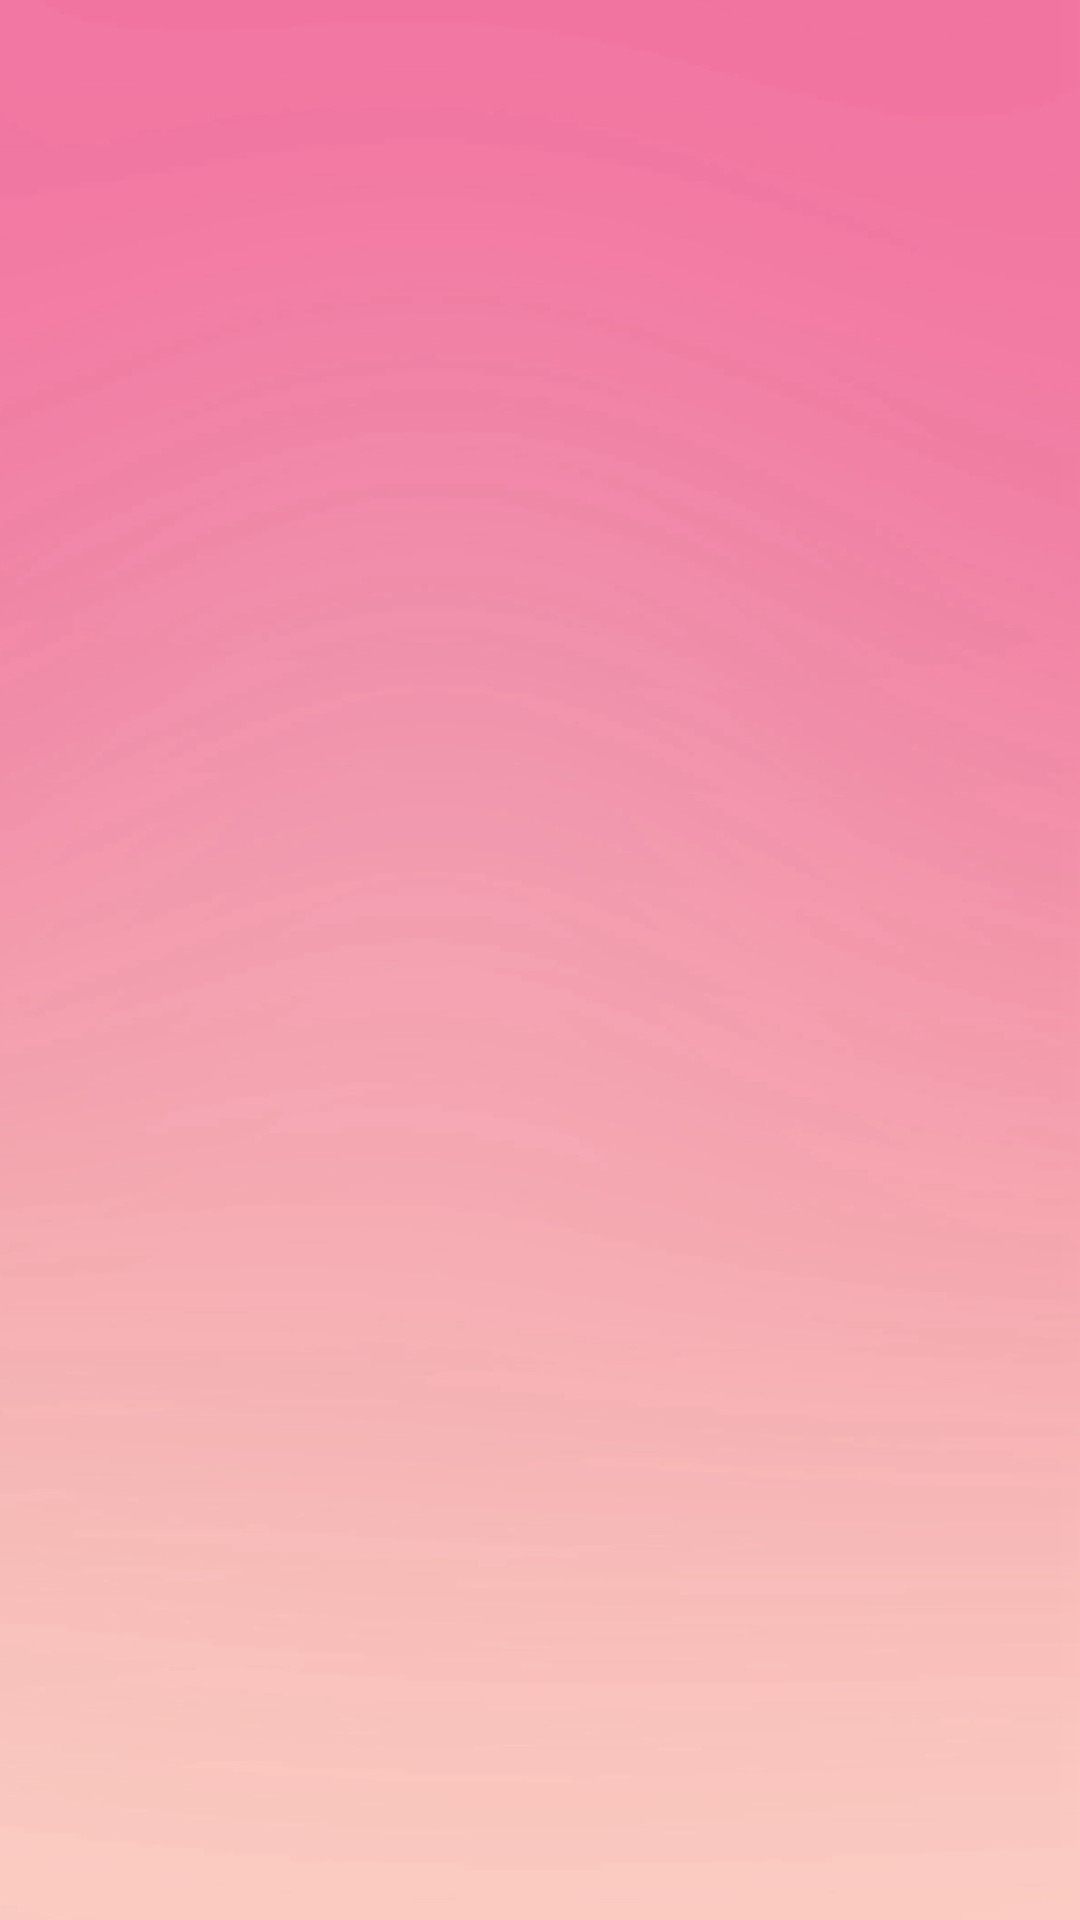 1080x1920 Pink Yellow Gradation Blur iPhone 6 wallpaper